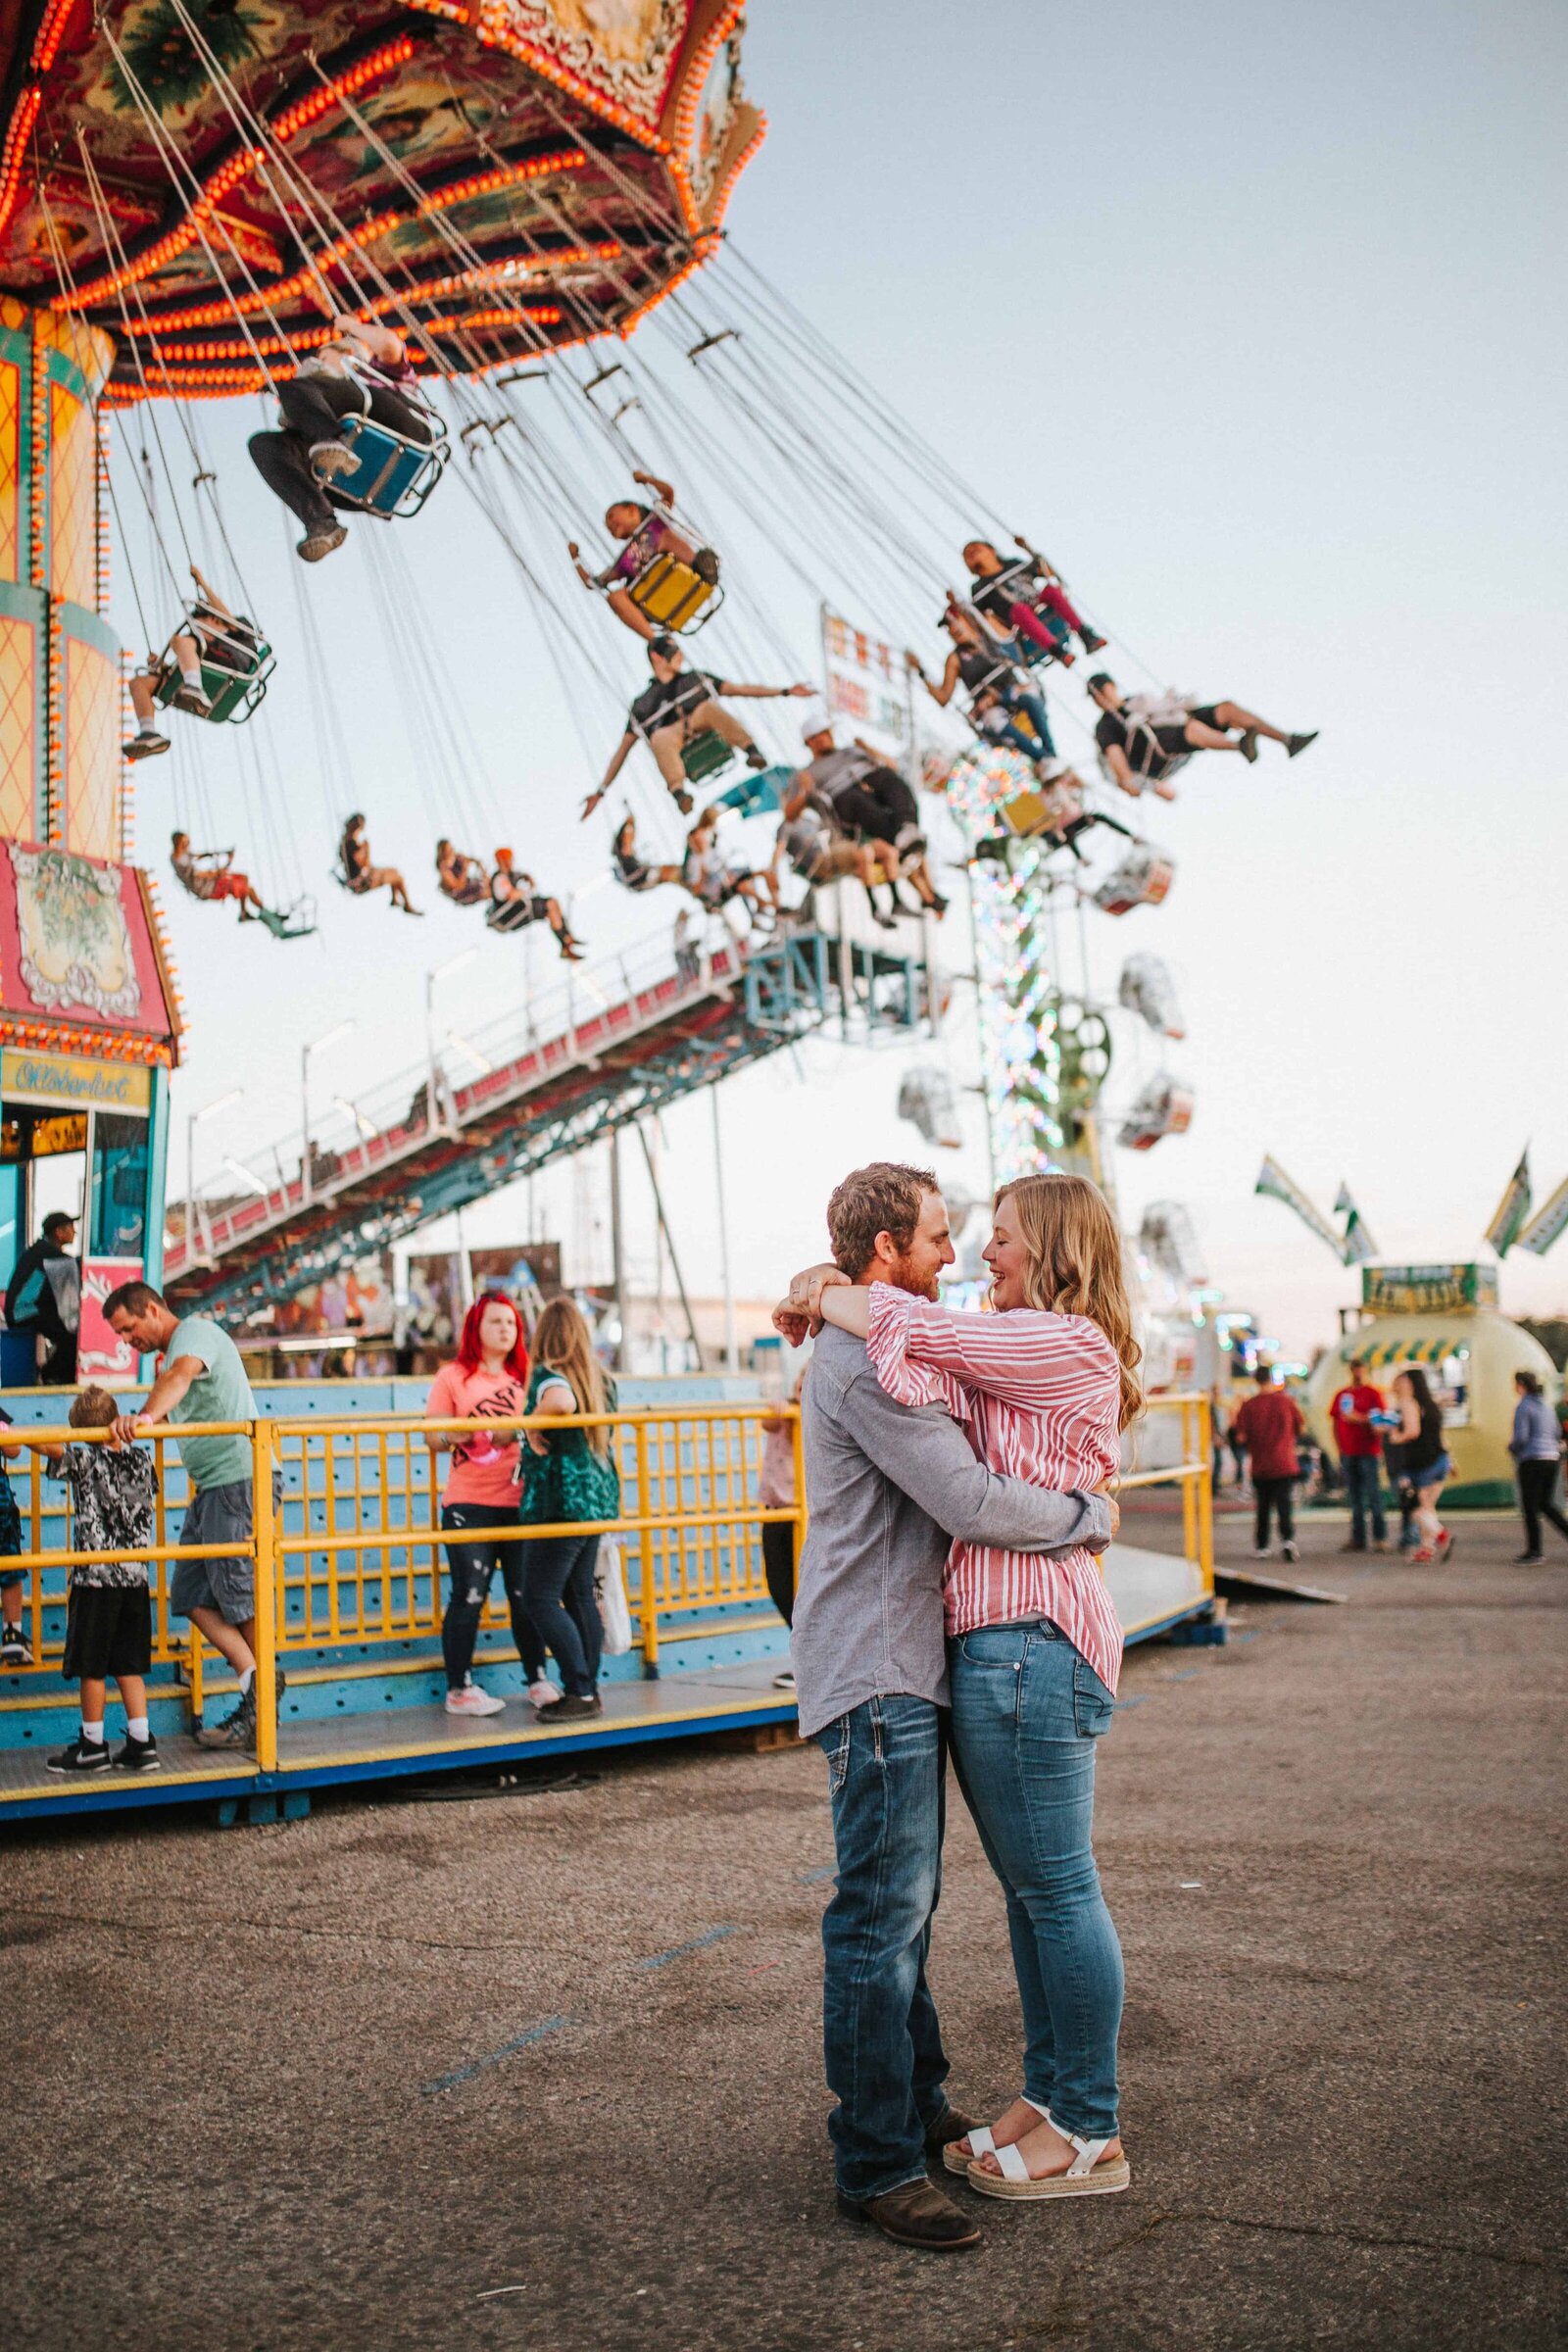 Lake Tahoe wedding photographer captures newly engaged couple at carnival shooting engagements